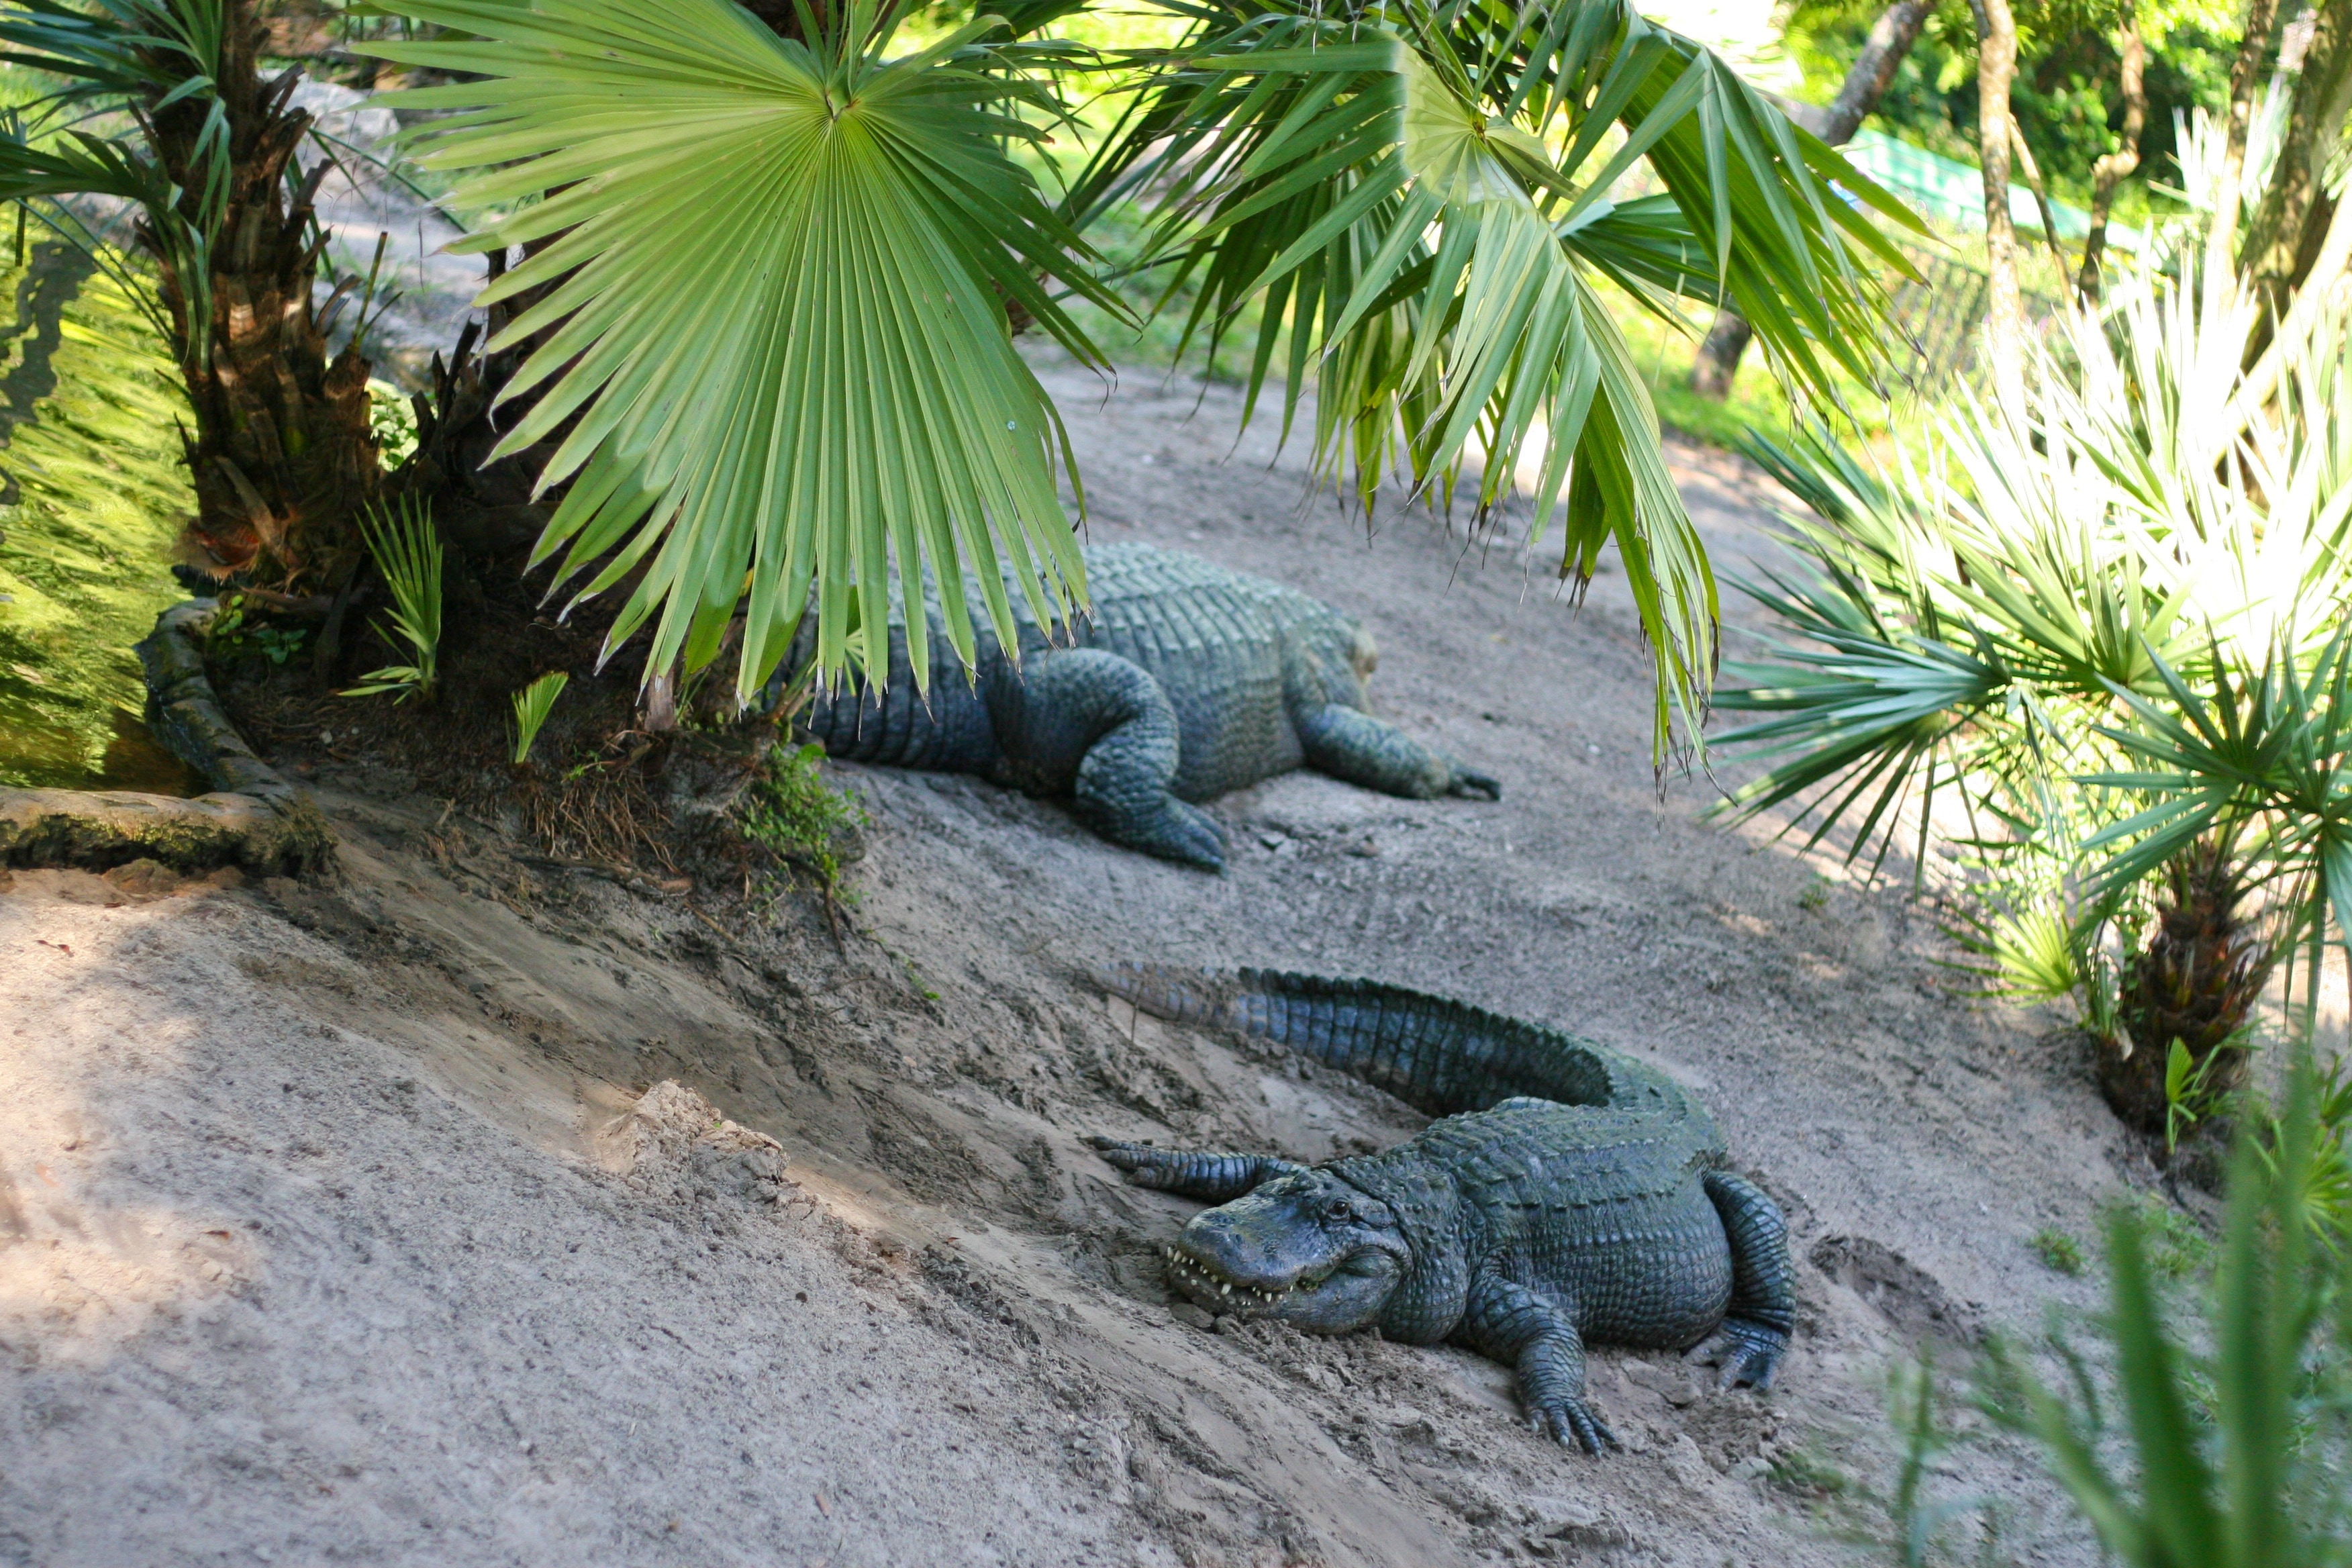 2 crocodiles